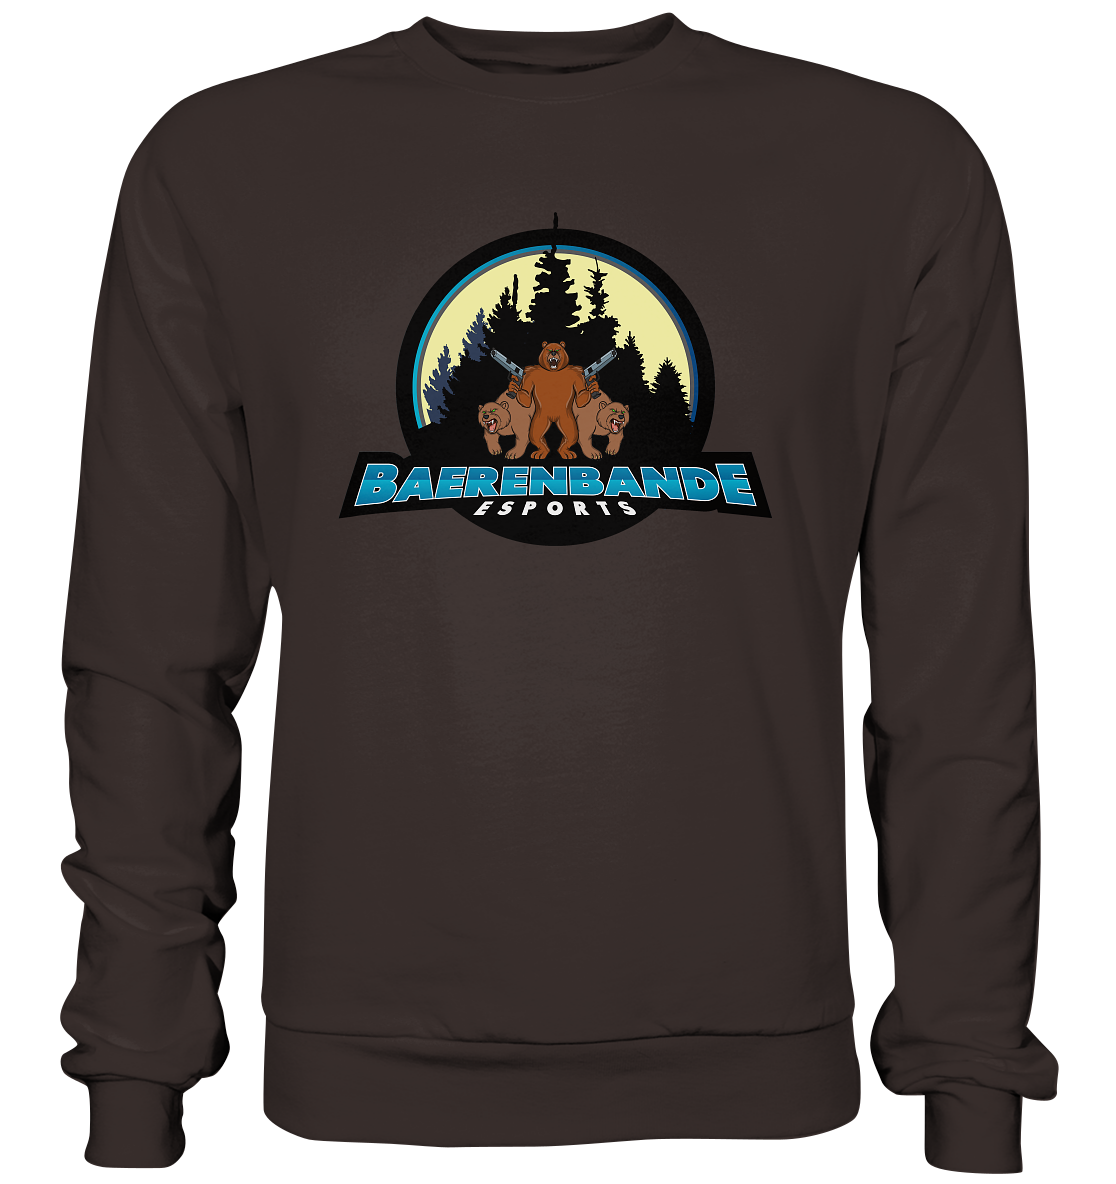 BAERENBANDE ESPORTS - Basic Sweatshirt